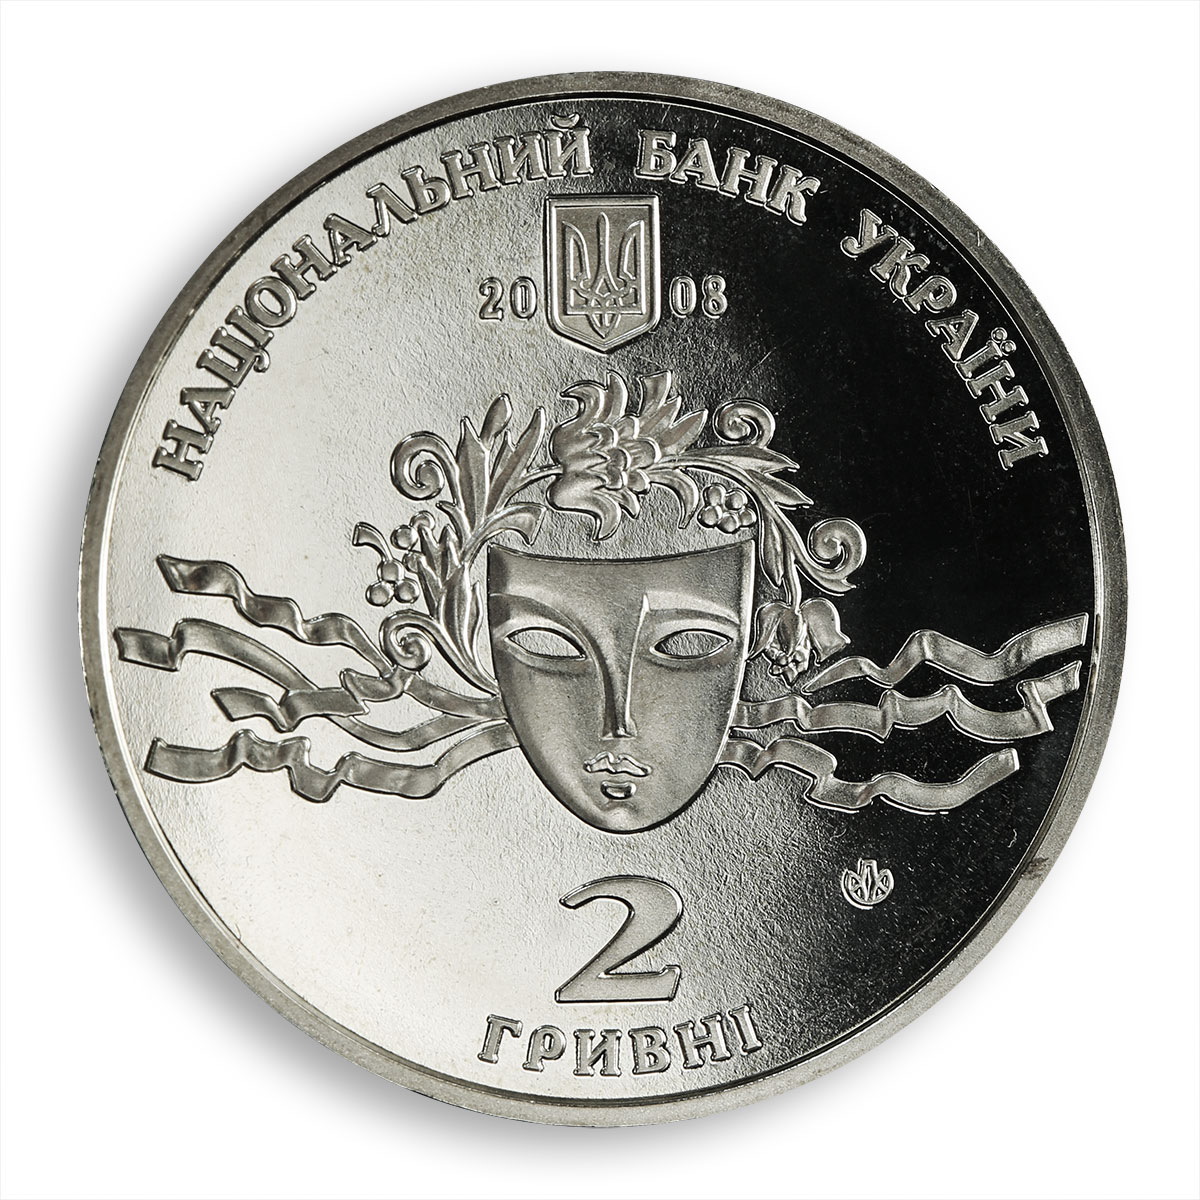 Ukraine 2 hryvnia Nataliia Uzhvii star actress theater cinema nickel coin 2008